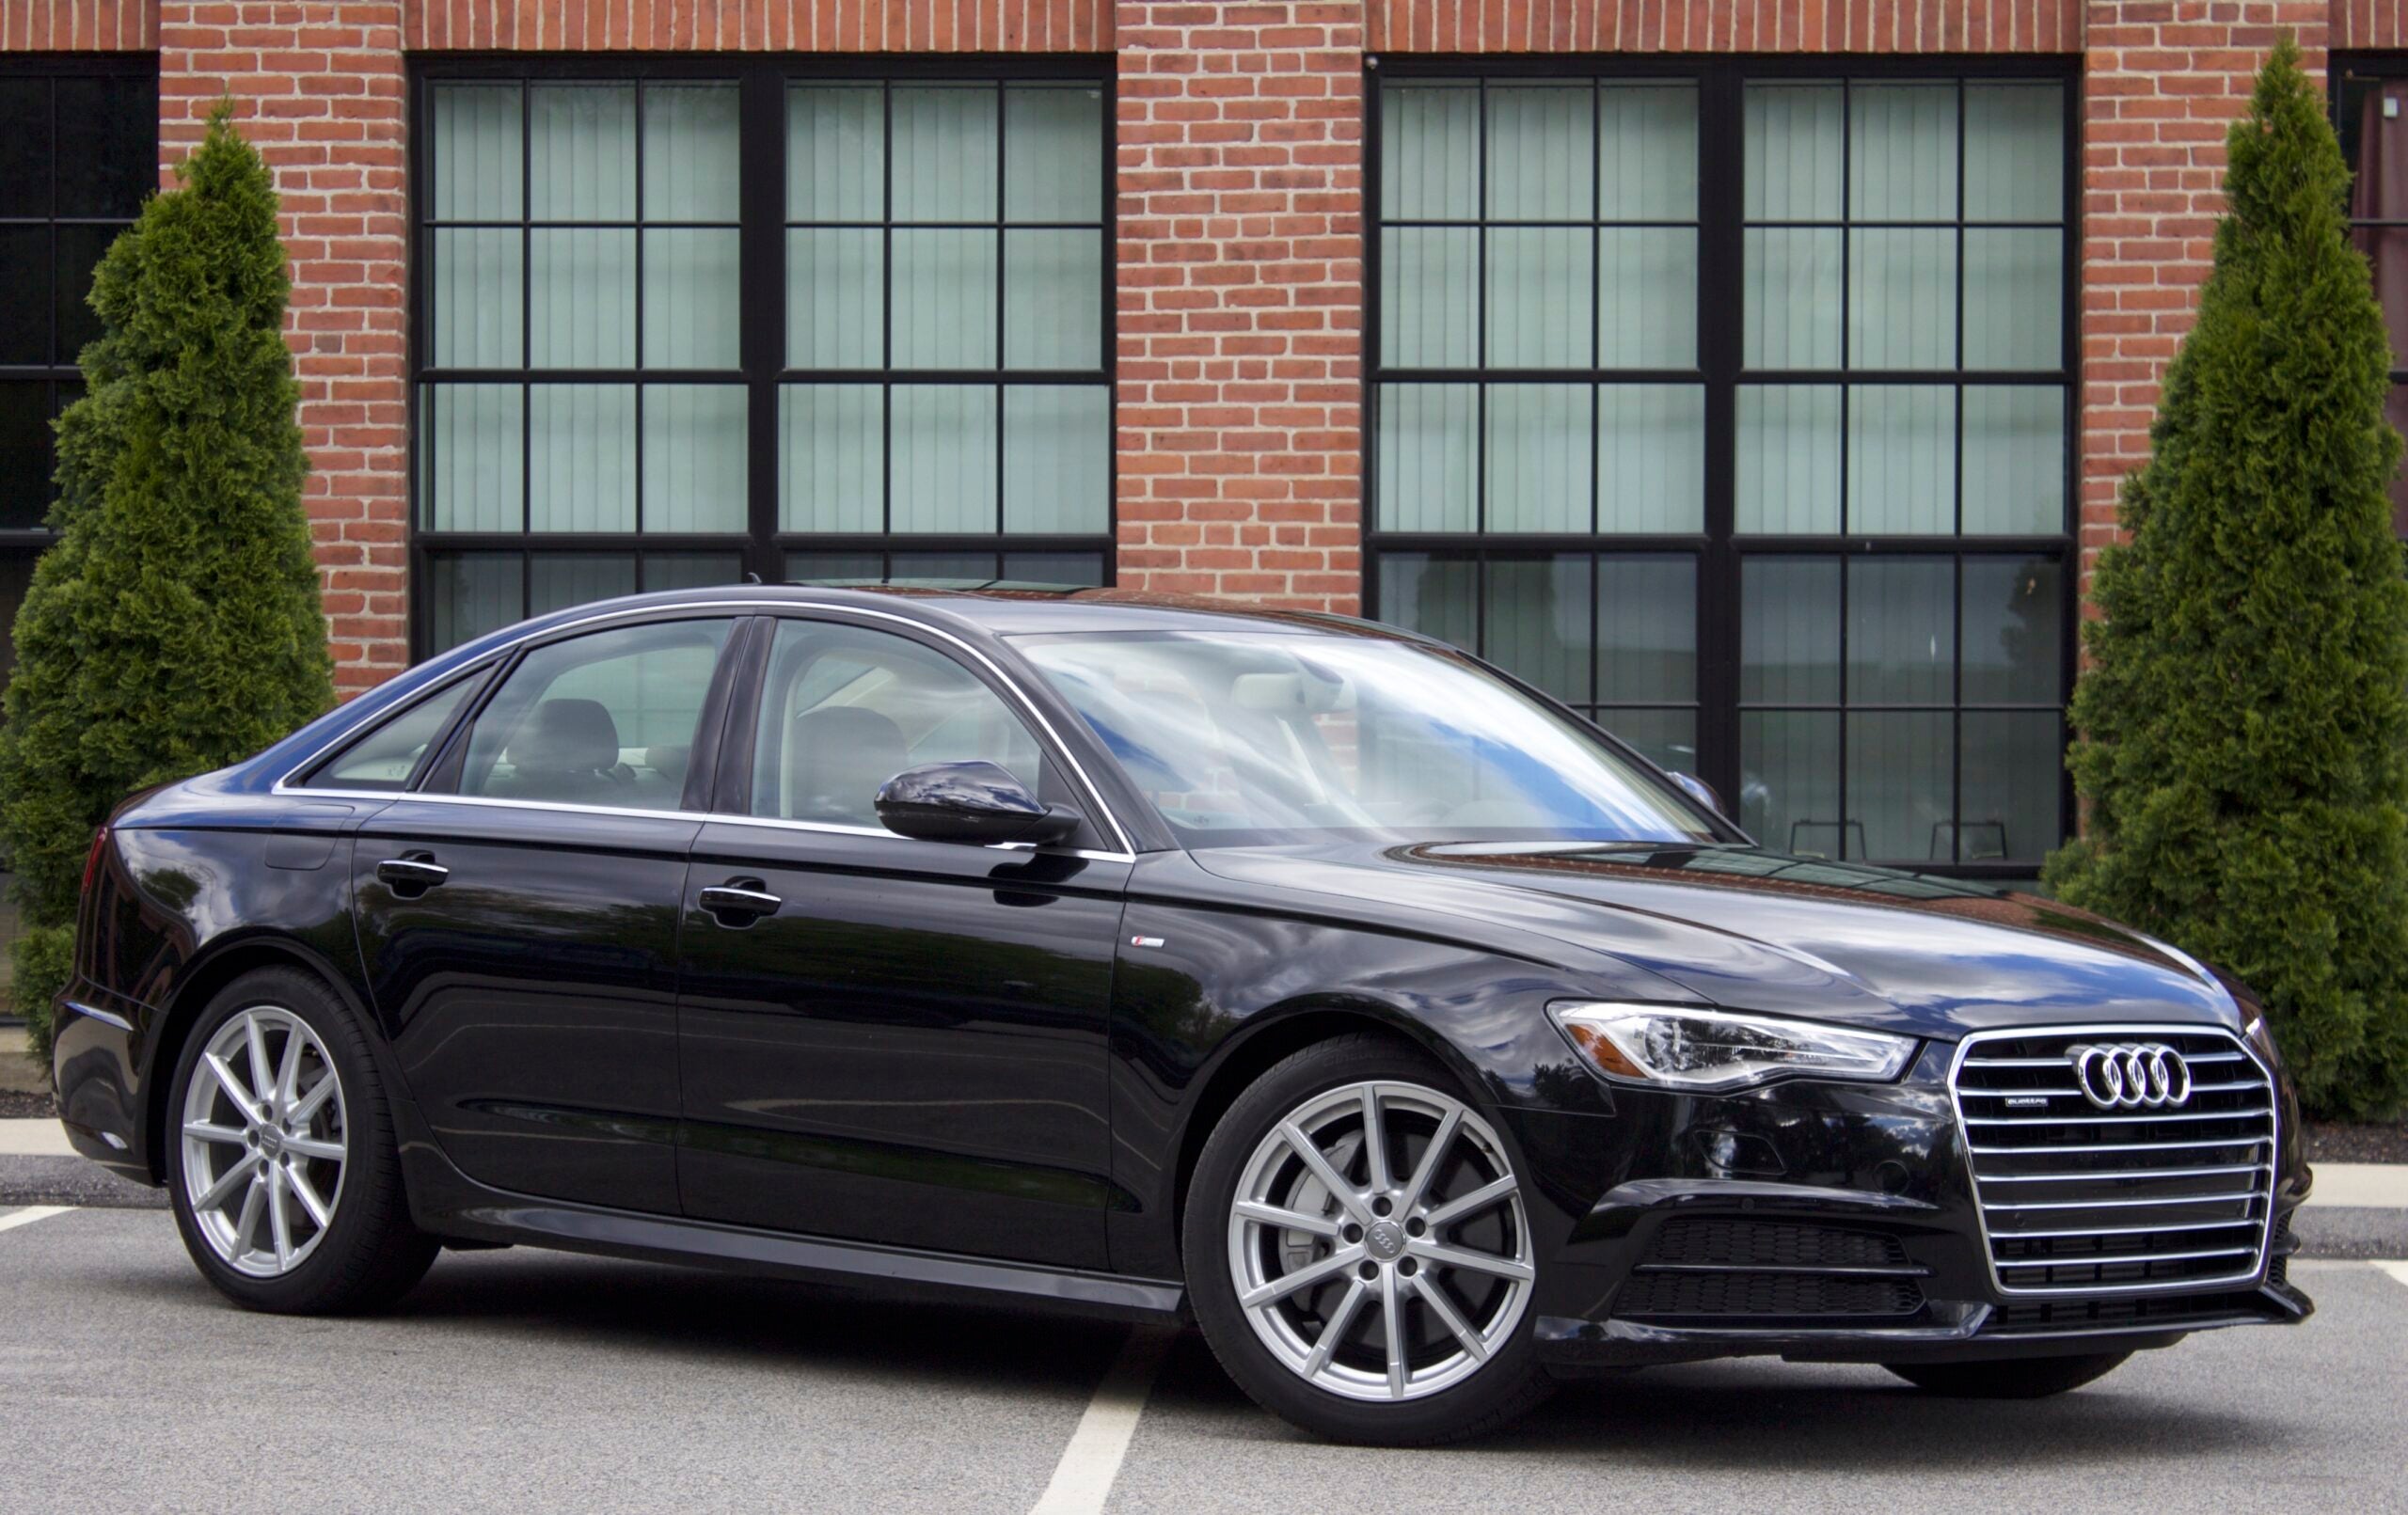 Is Audi A6 a luxury car?